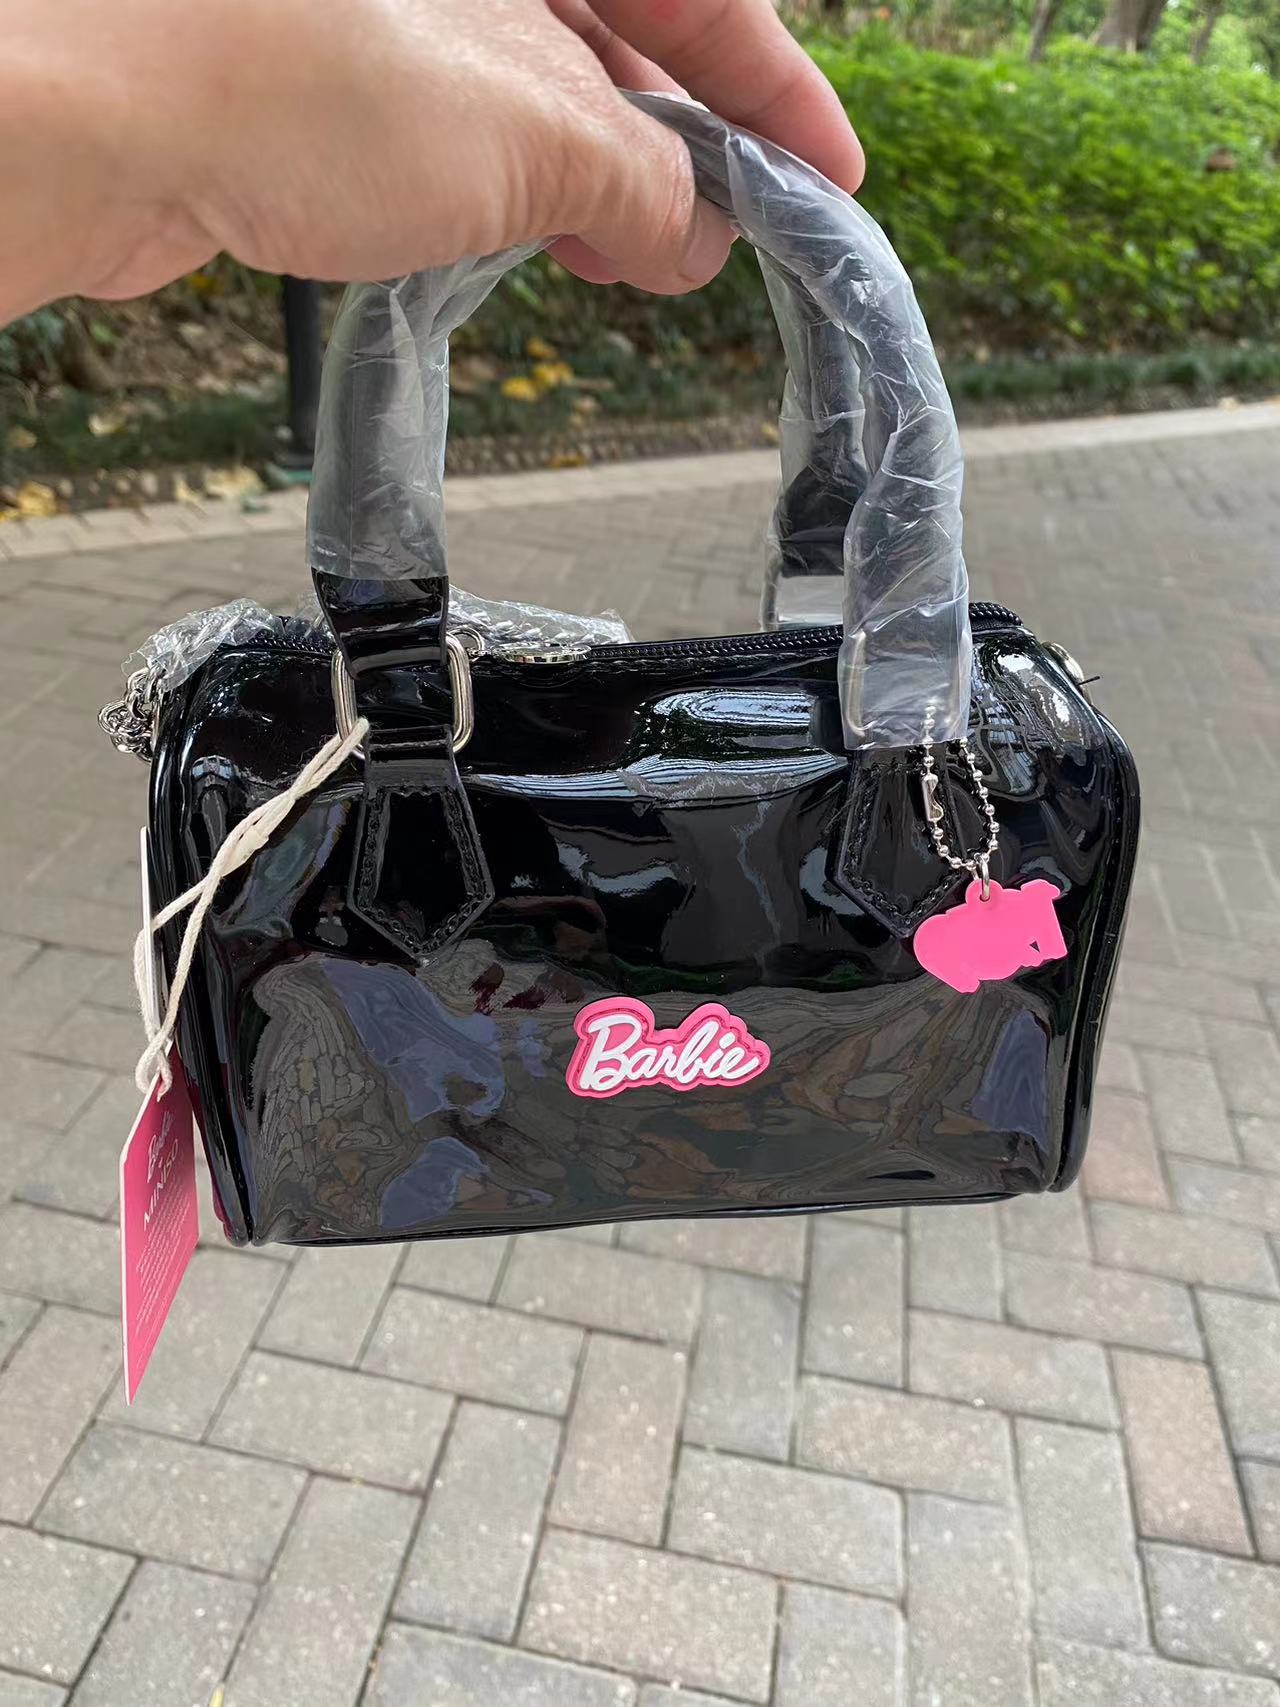 Miniso Barbie Series Pink Transparent Bag Fashion Style – Yvonne12785